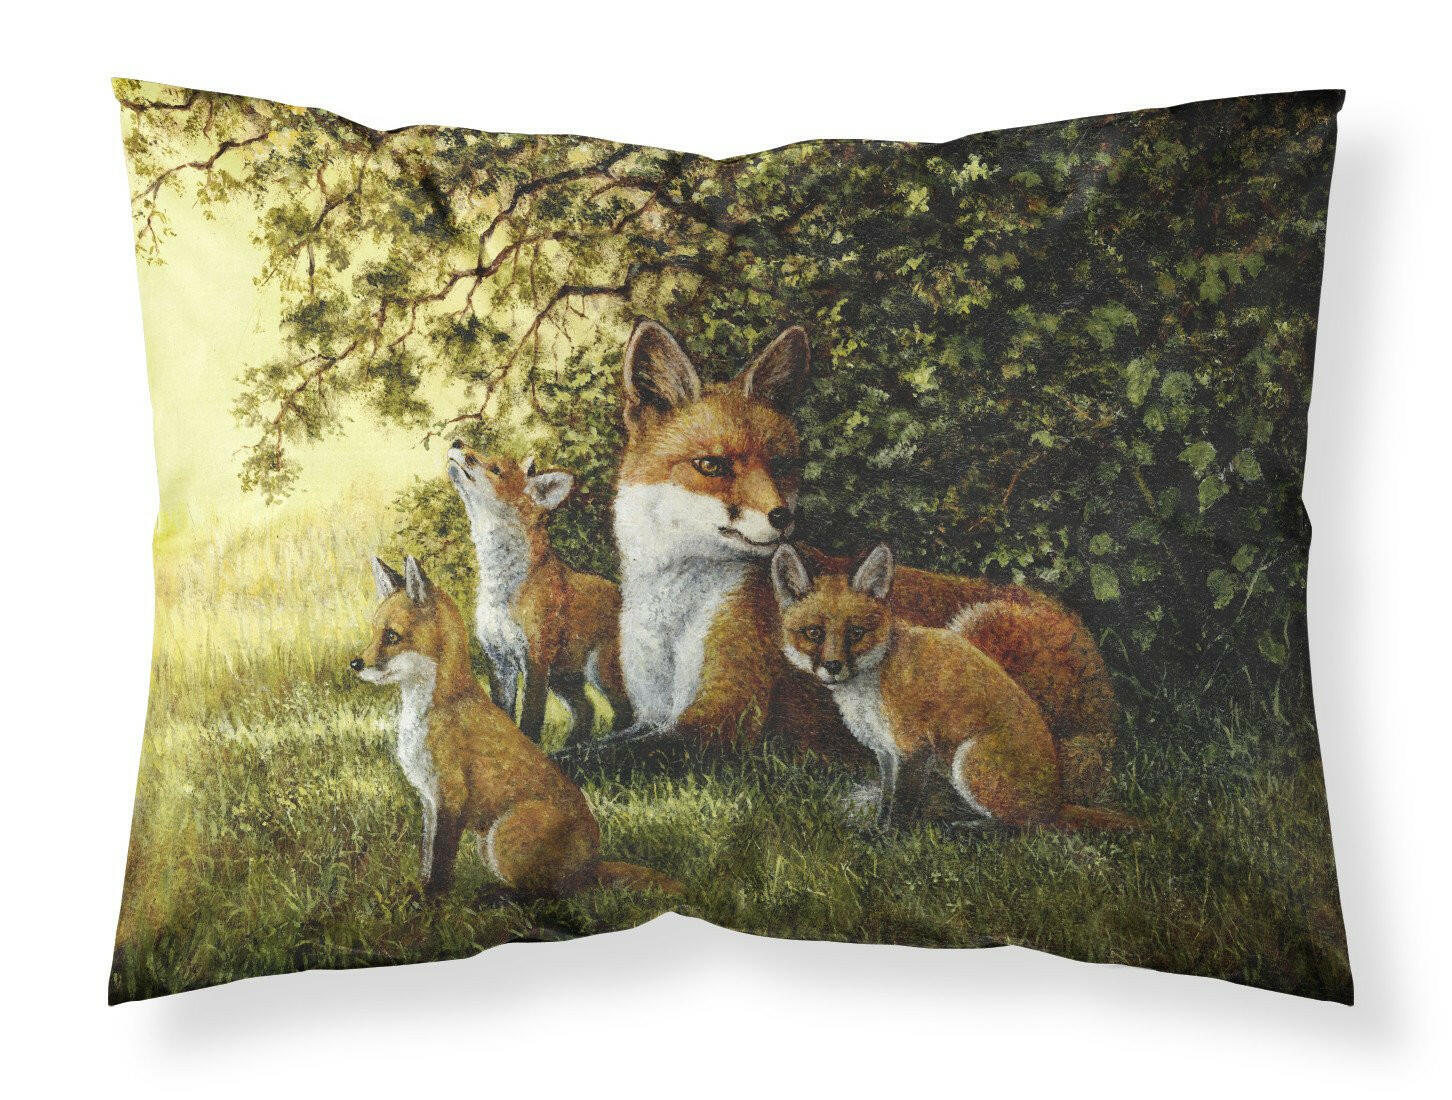 Foxes Resitng under the Tree Fabric Standard Pillowcase BDBA0382PILLOWCASE by Caroline's Treasures